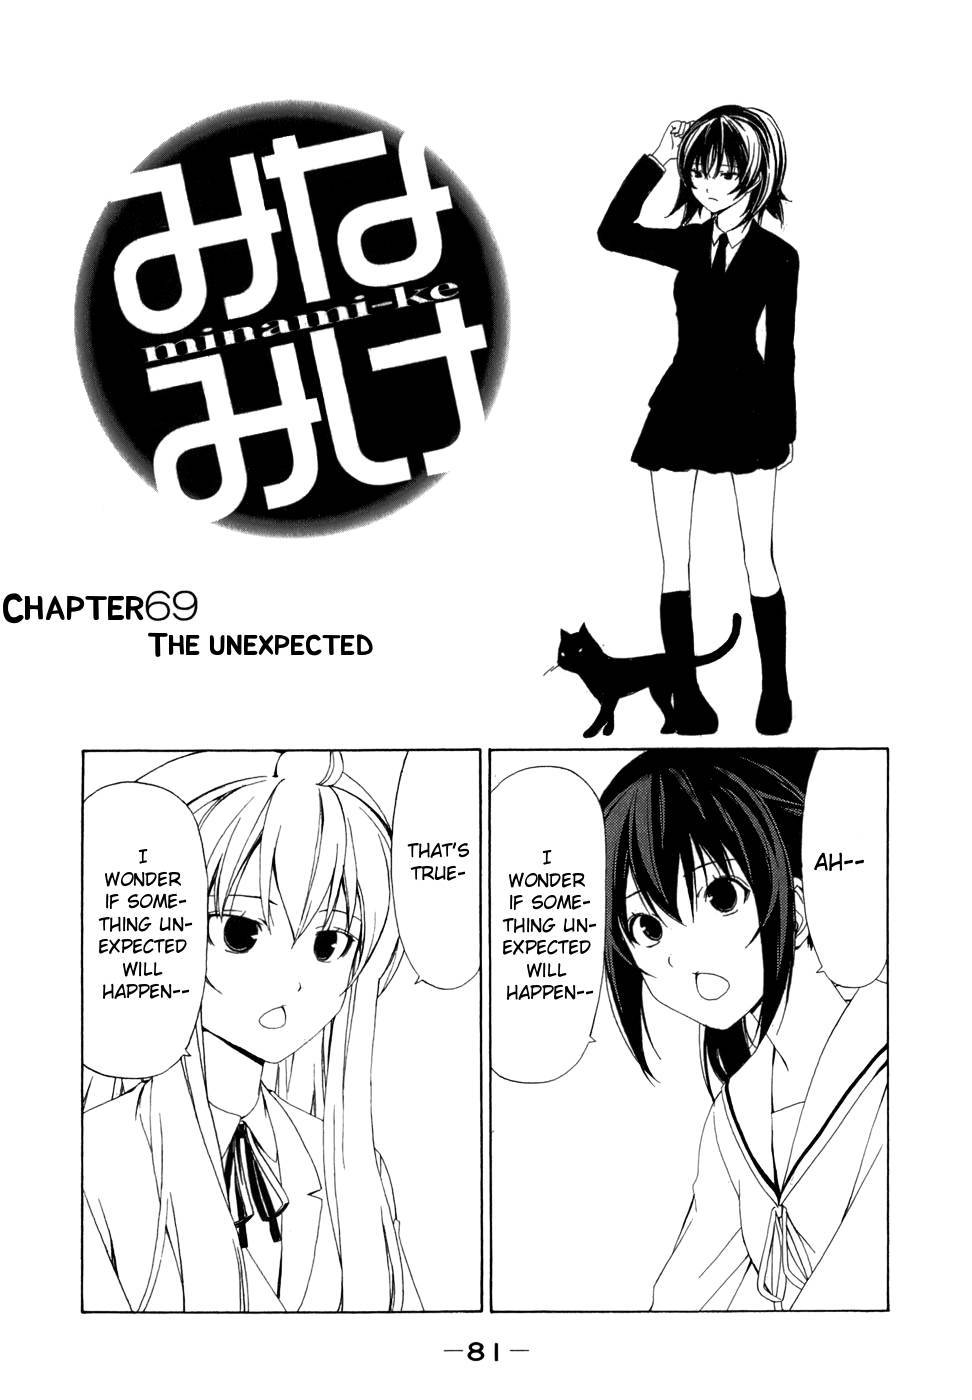 Minami-ke chapter 69 page 1